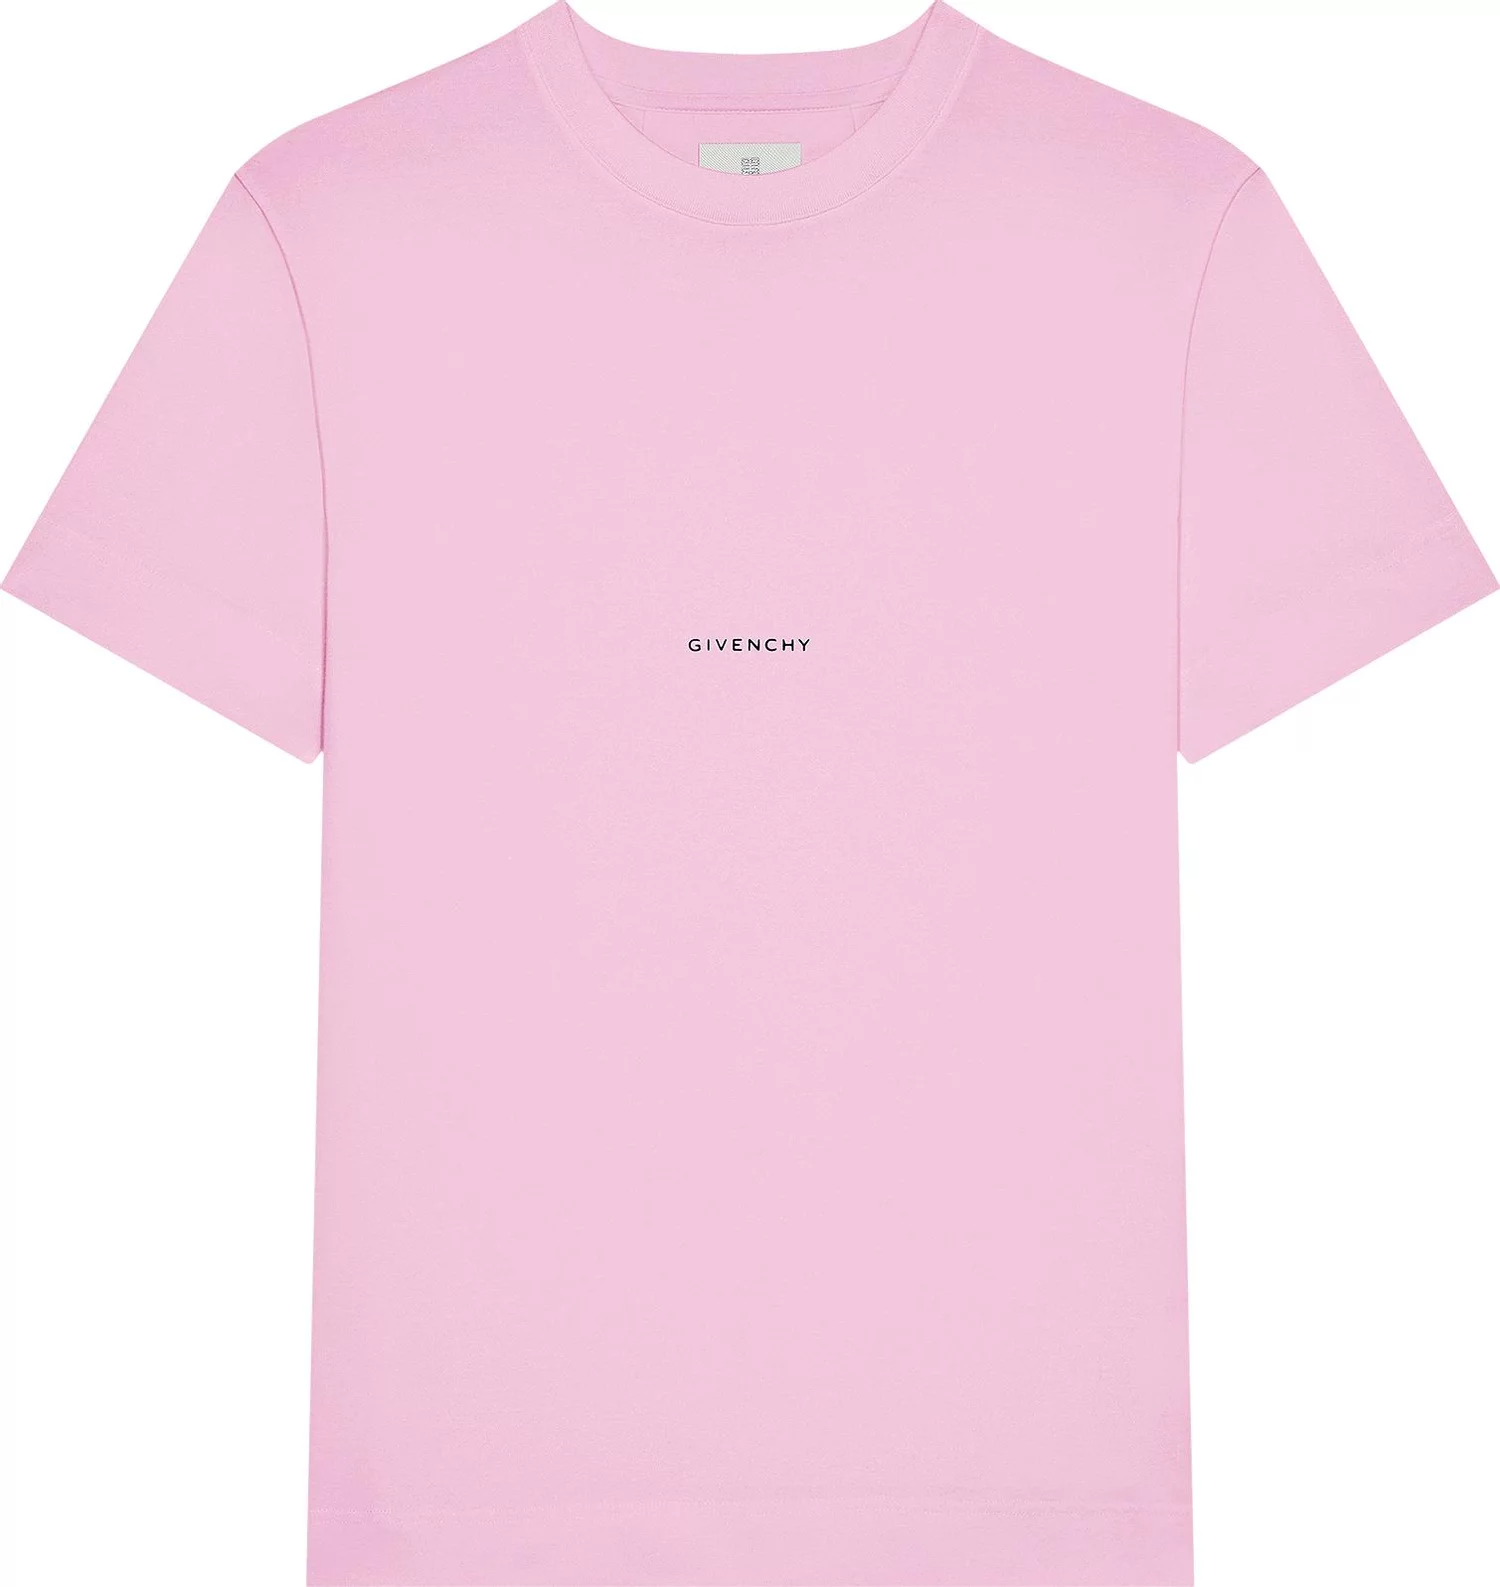 Givenchy Logo Text T-Shirt Pink